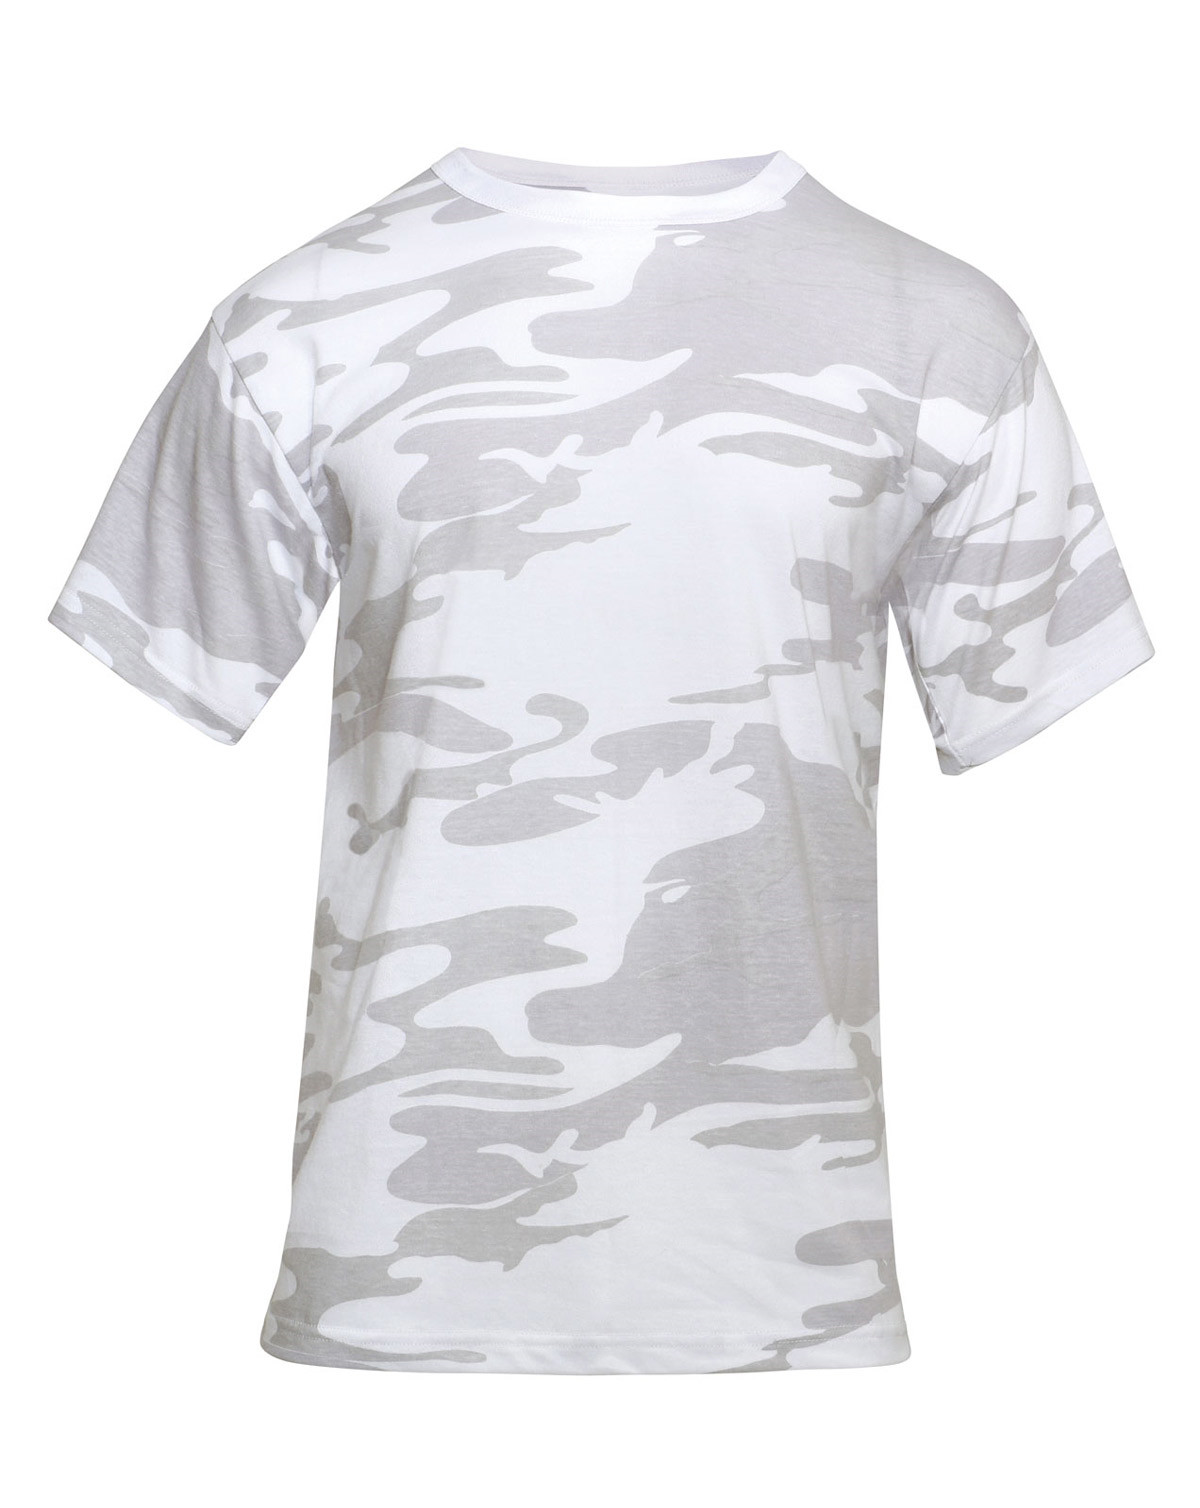 Rothco T-shirt - Mange Camouflager (Grå / Hvid, XL)